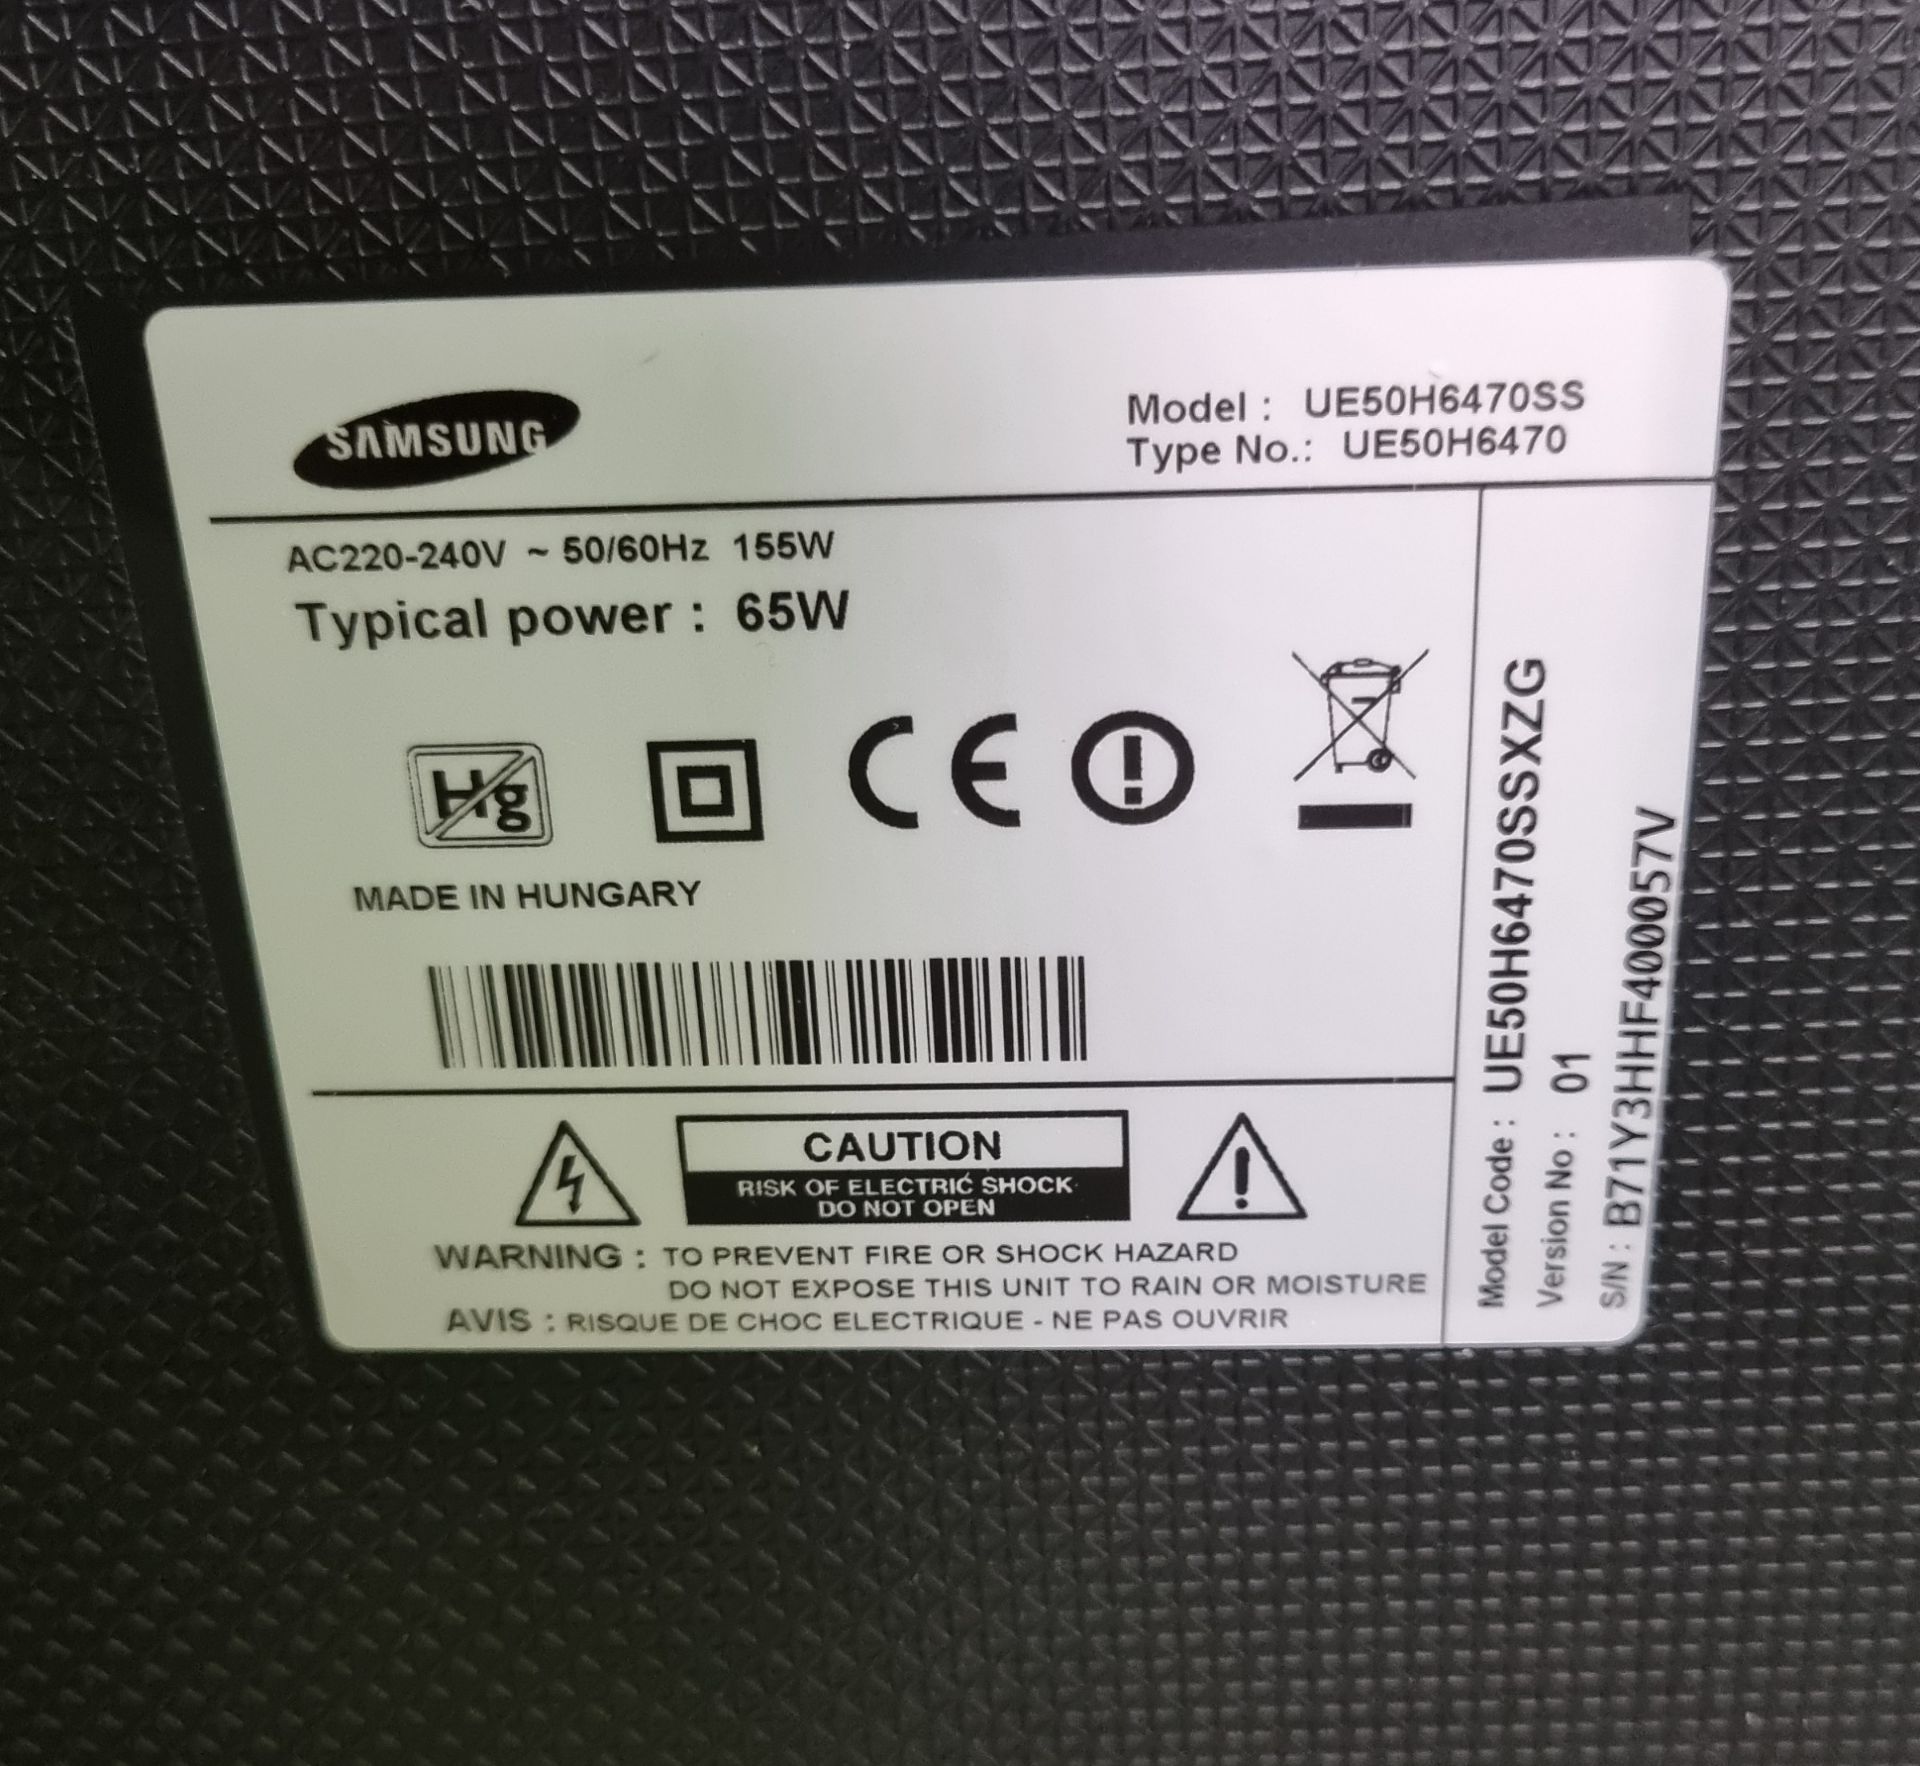 Samsung UE50H6470SS 50 inch 1080p HD TV - Image 5 of 7